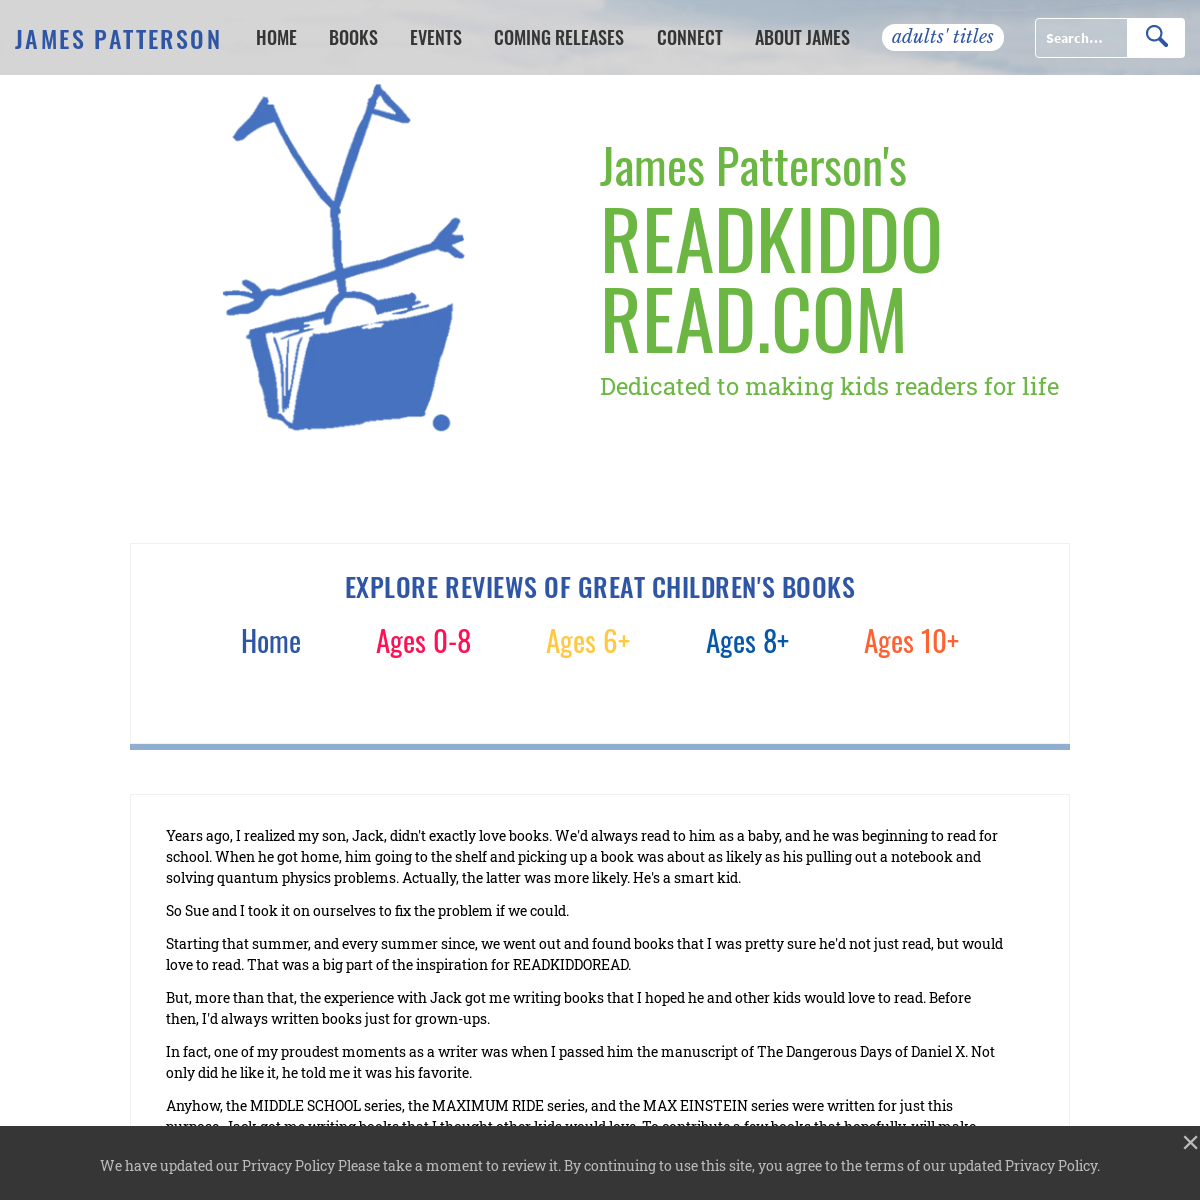 A complete backup of readkiddoread.com